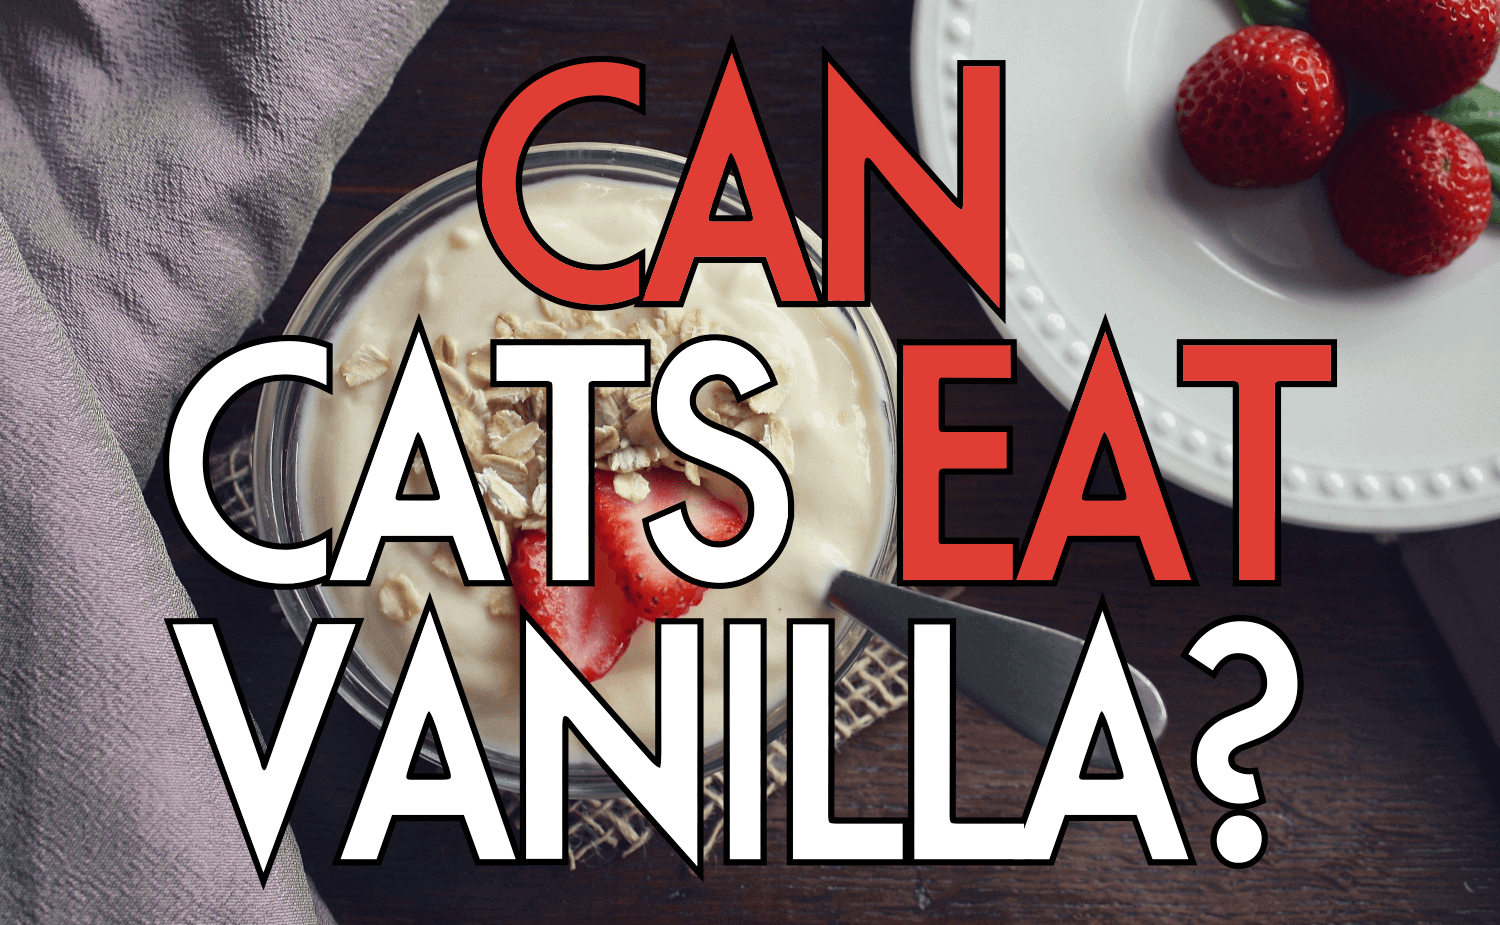 Can Cats Eat Vanilla?